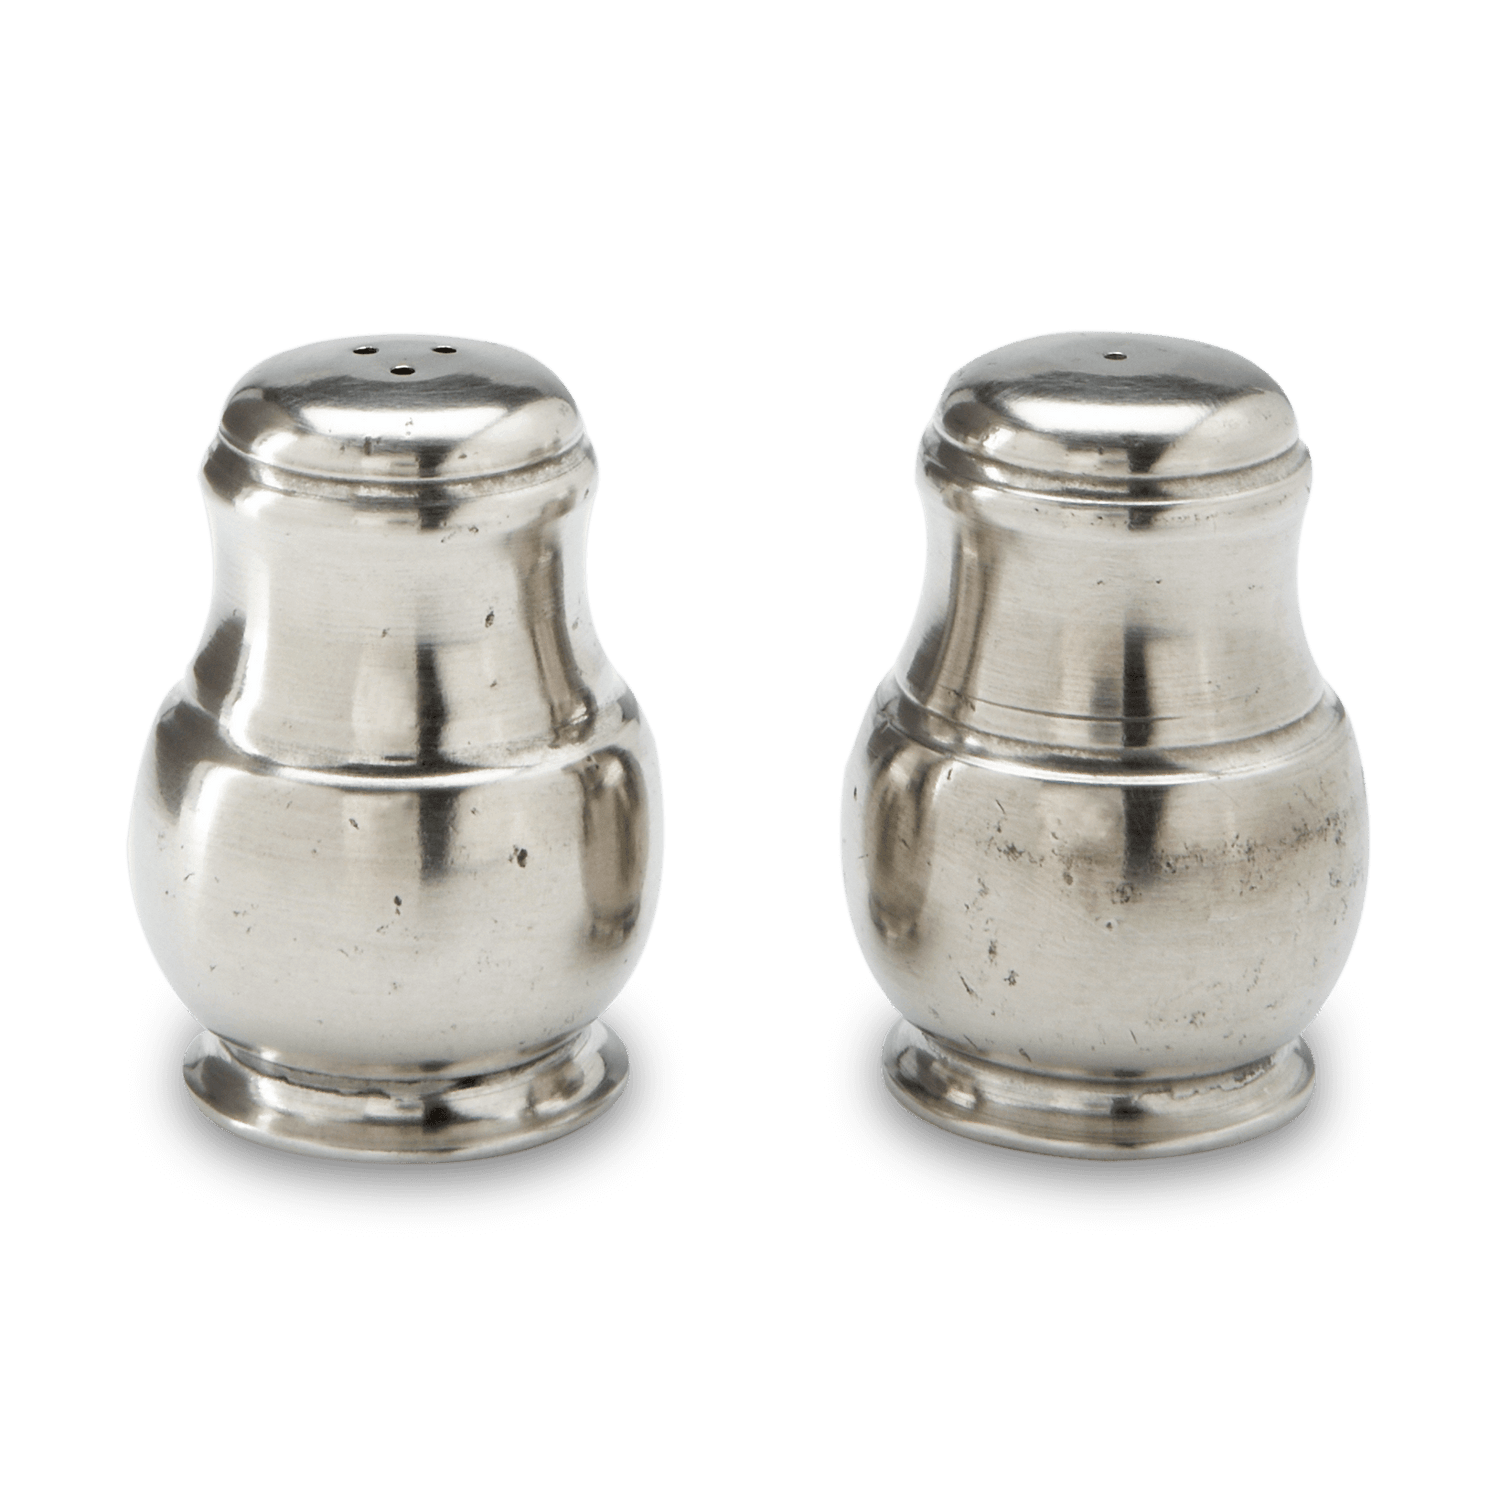 MATCH Pewter Piccoli Small Salt & Pepper Shaker Set